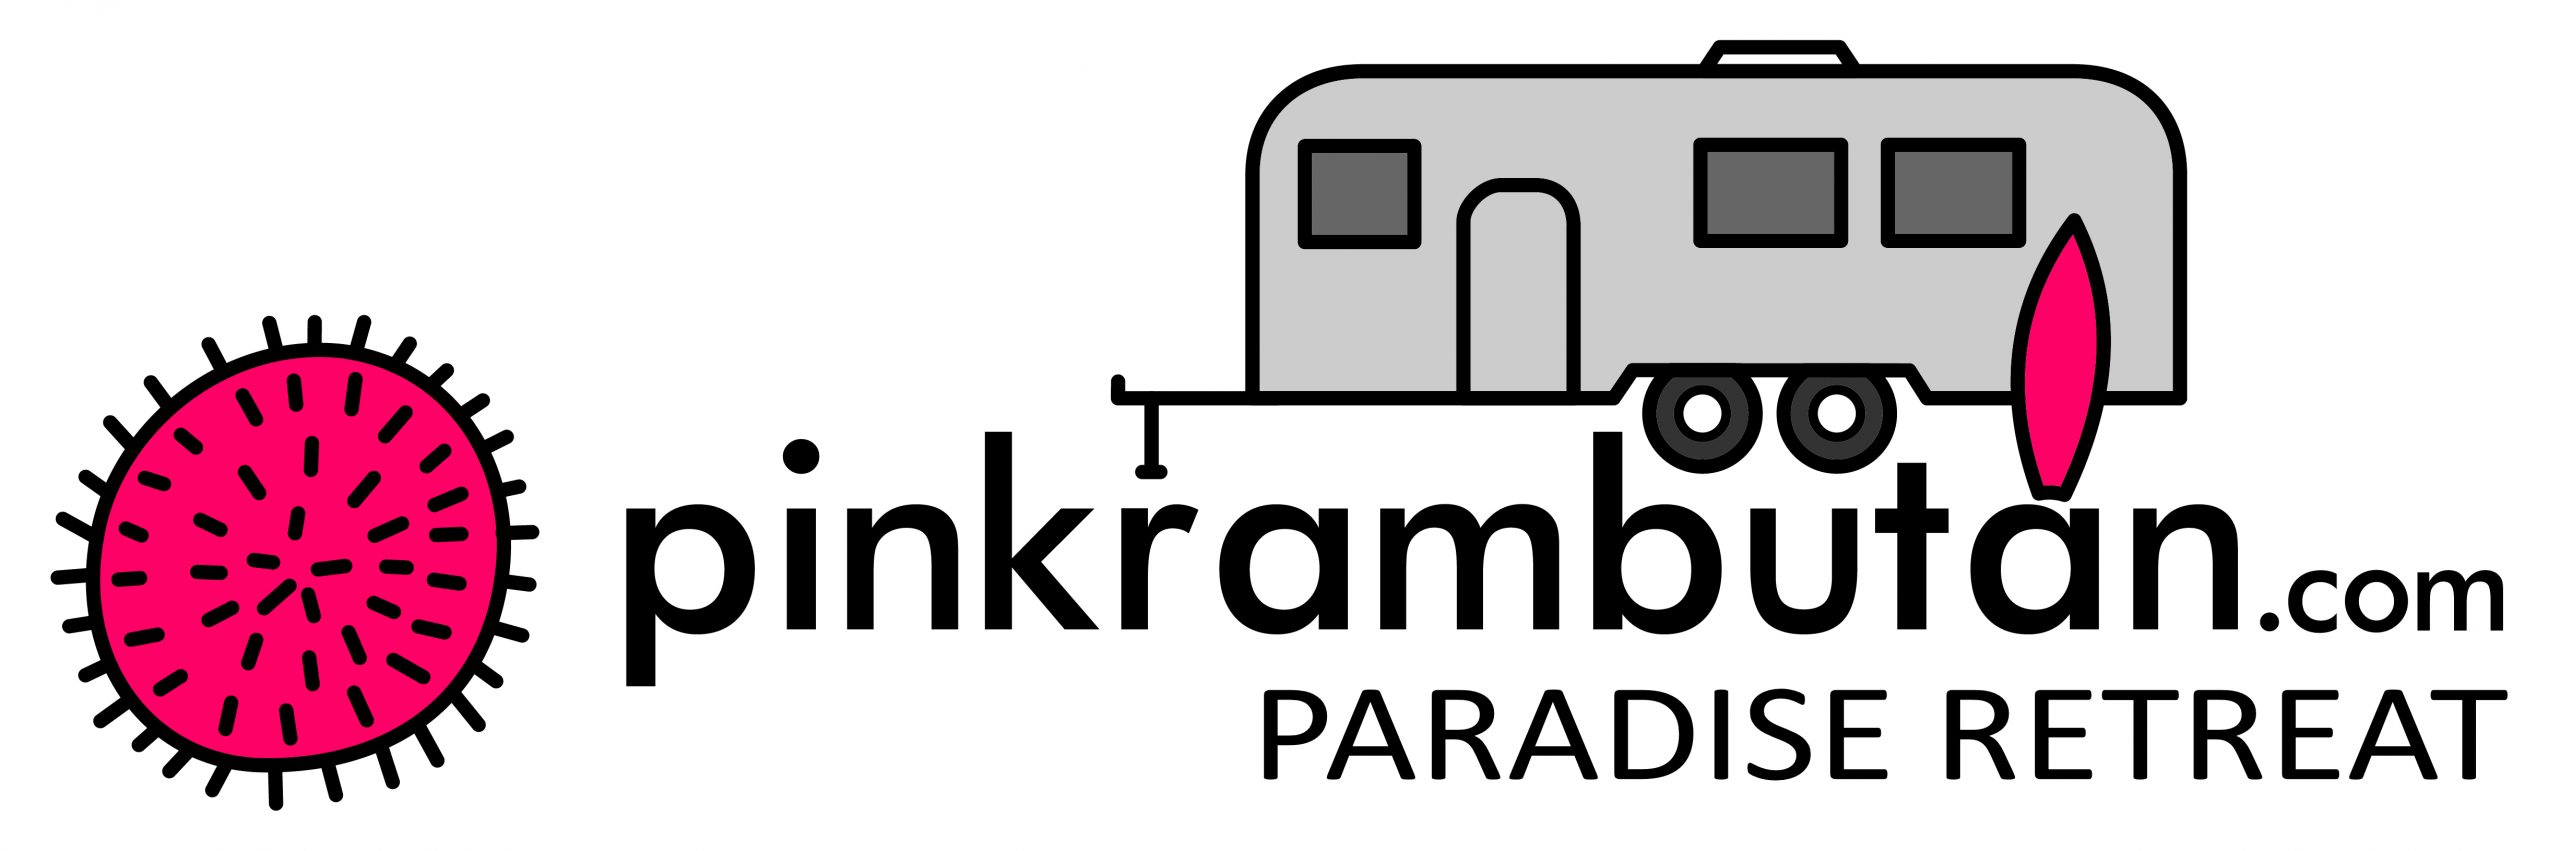 pinkrambutan - Your Glamping Paradise Retreat in Sicily